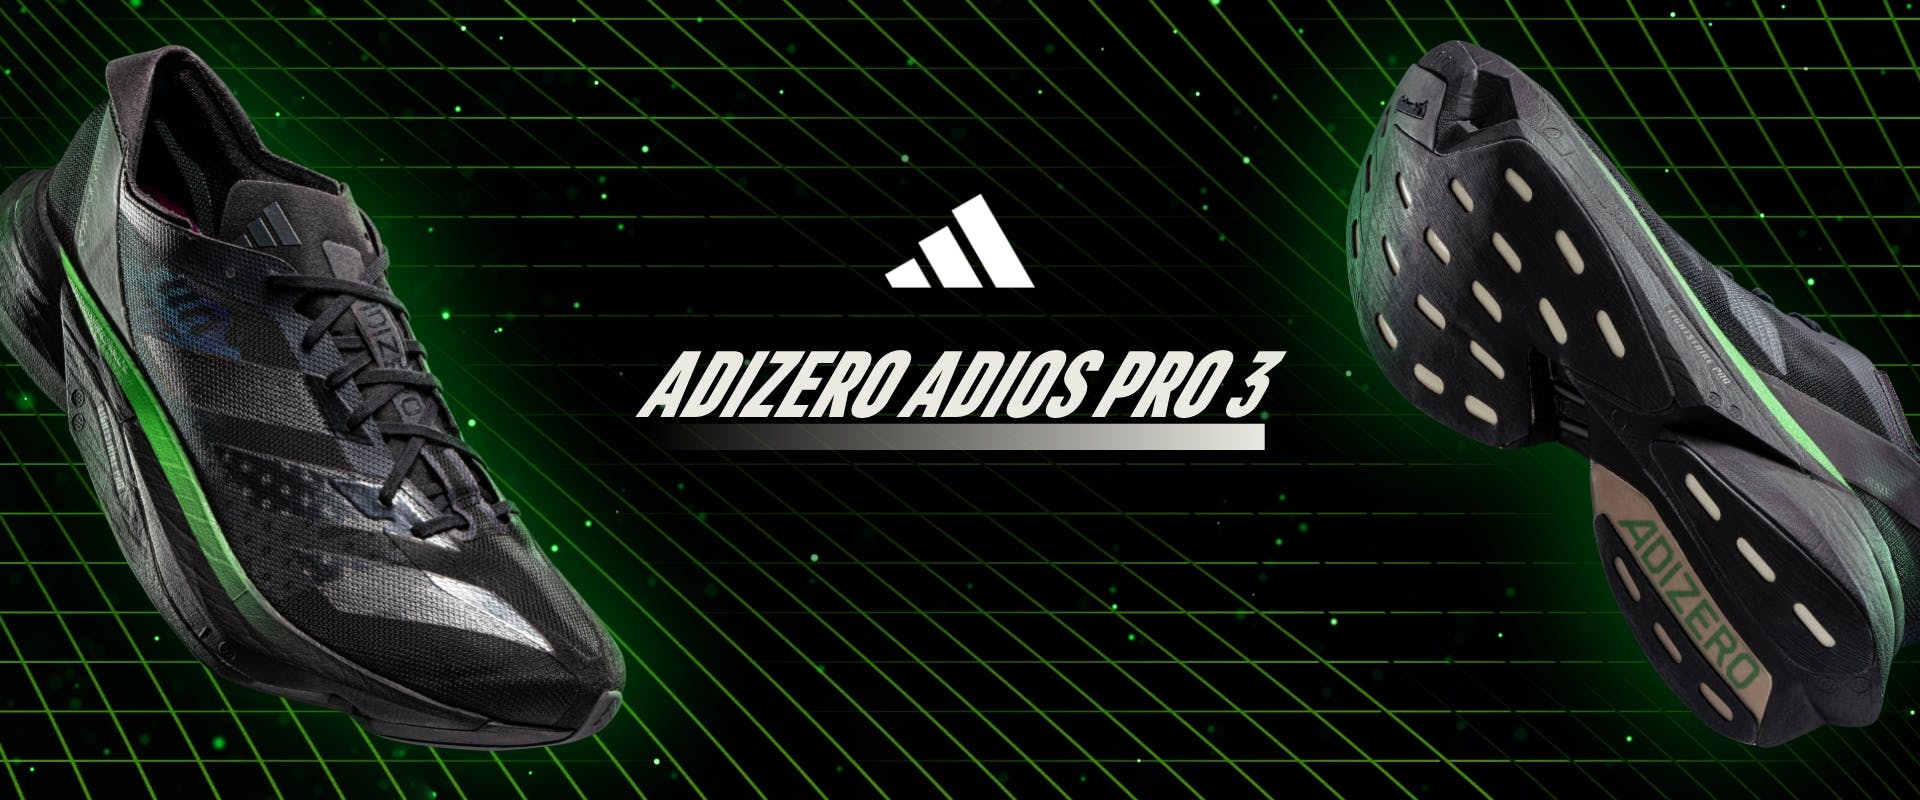 ADIDAS Adizero Adios Pro 3